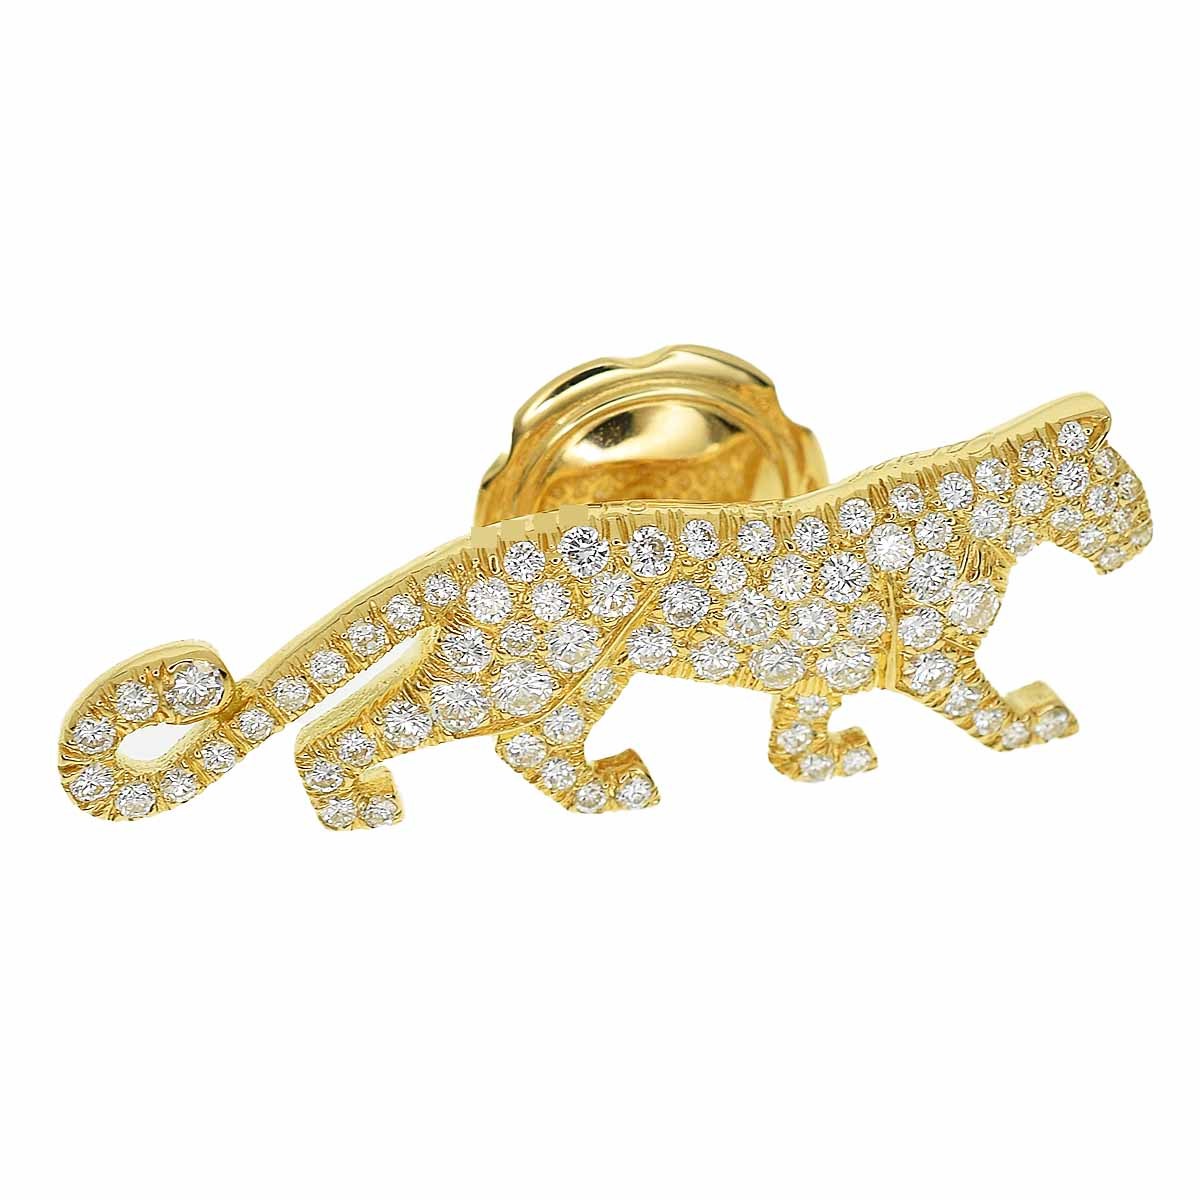 Cartier Cartier ma рукоятка go хлеб tail бриллиант булавка брошь 750 K18 YG желтое золото 321141101